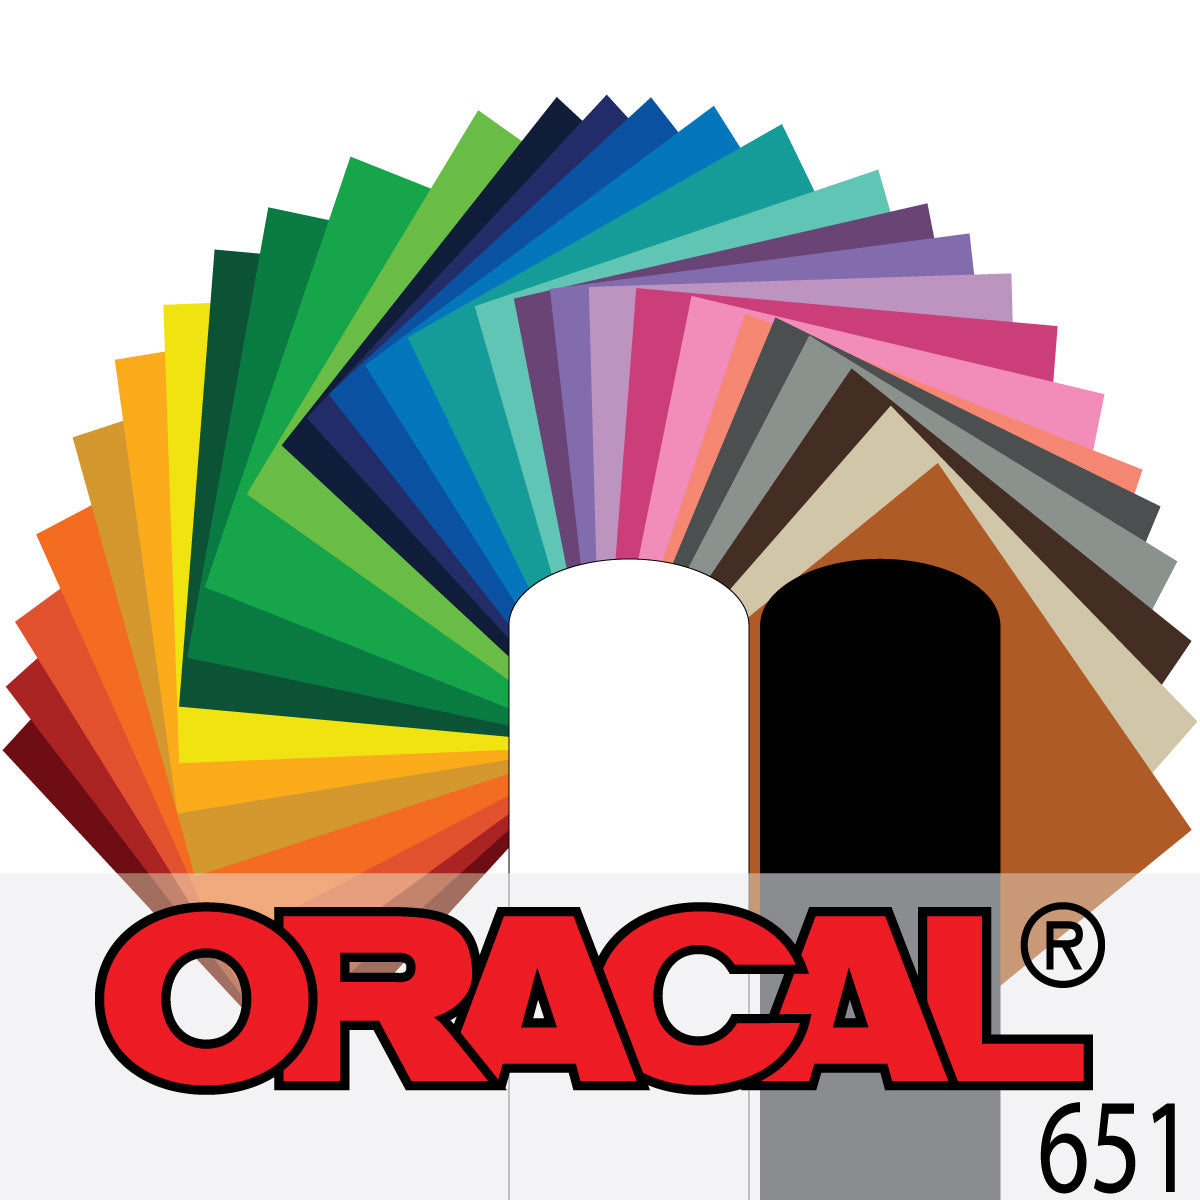 Oracal 651 Adhesive Vinyl Roll 15 x 5 Yards